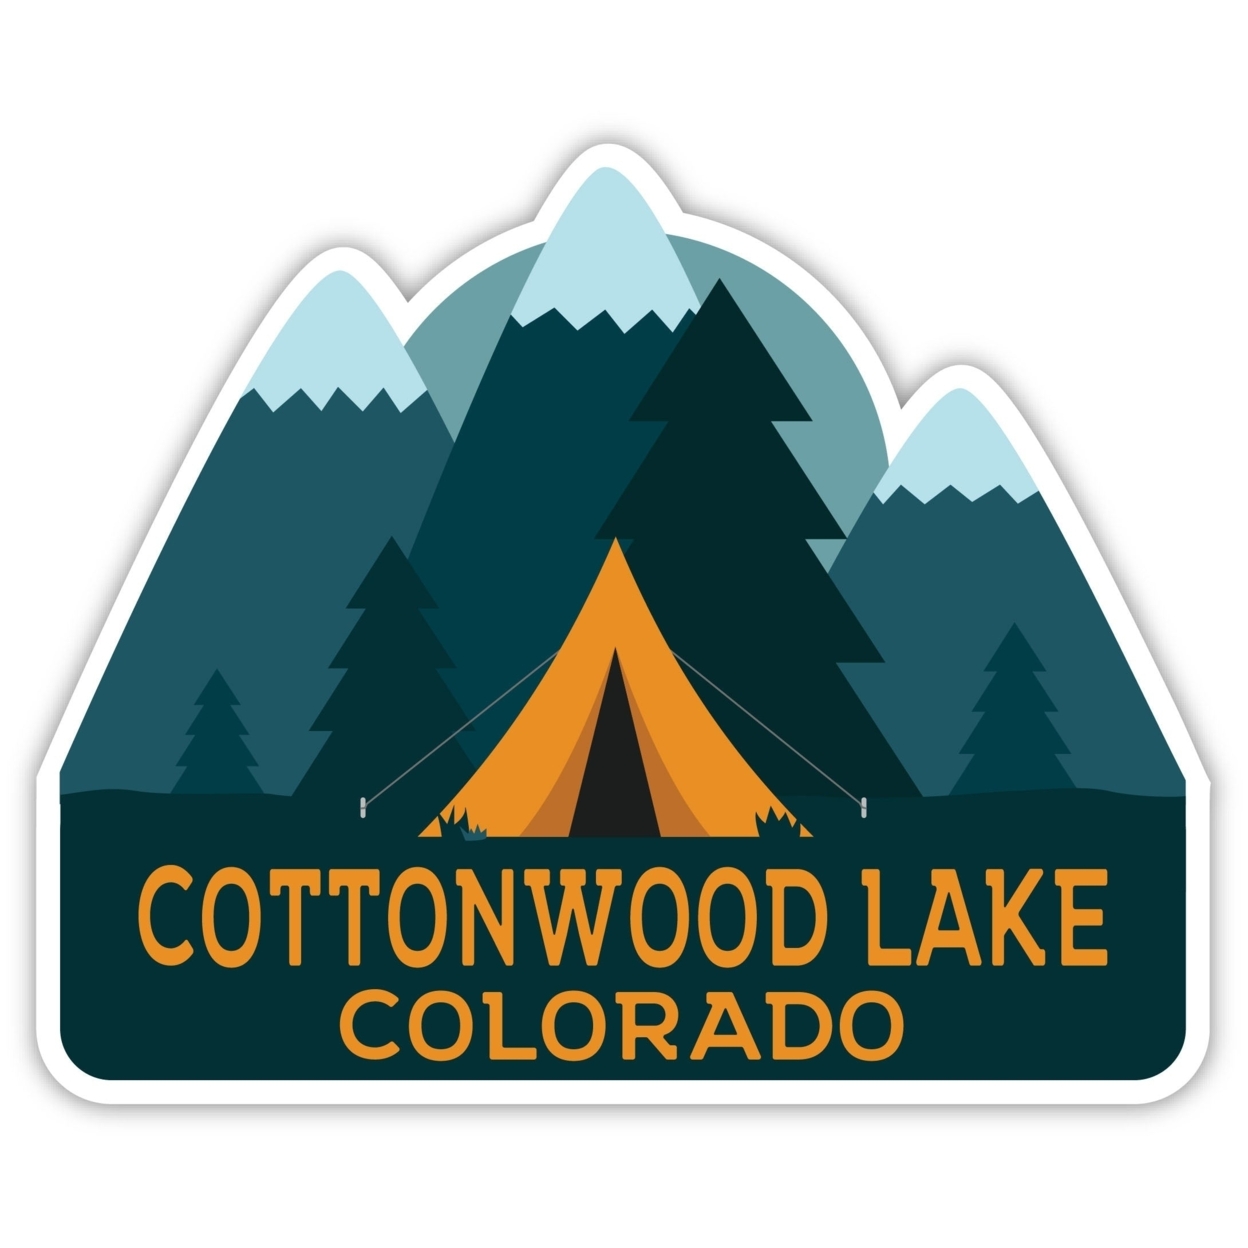 Cottonwood Lake Colorado Souvenir Decorative Stickers (Choose Theme And Size) - 4-Pack, 10-Inch, Bear